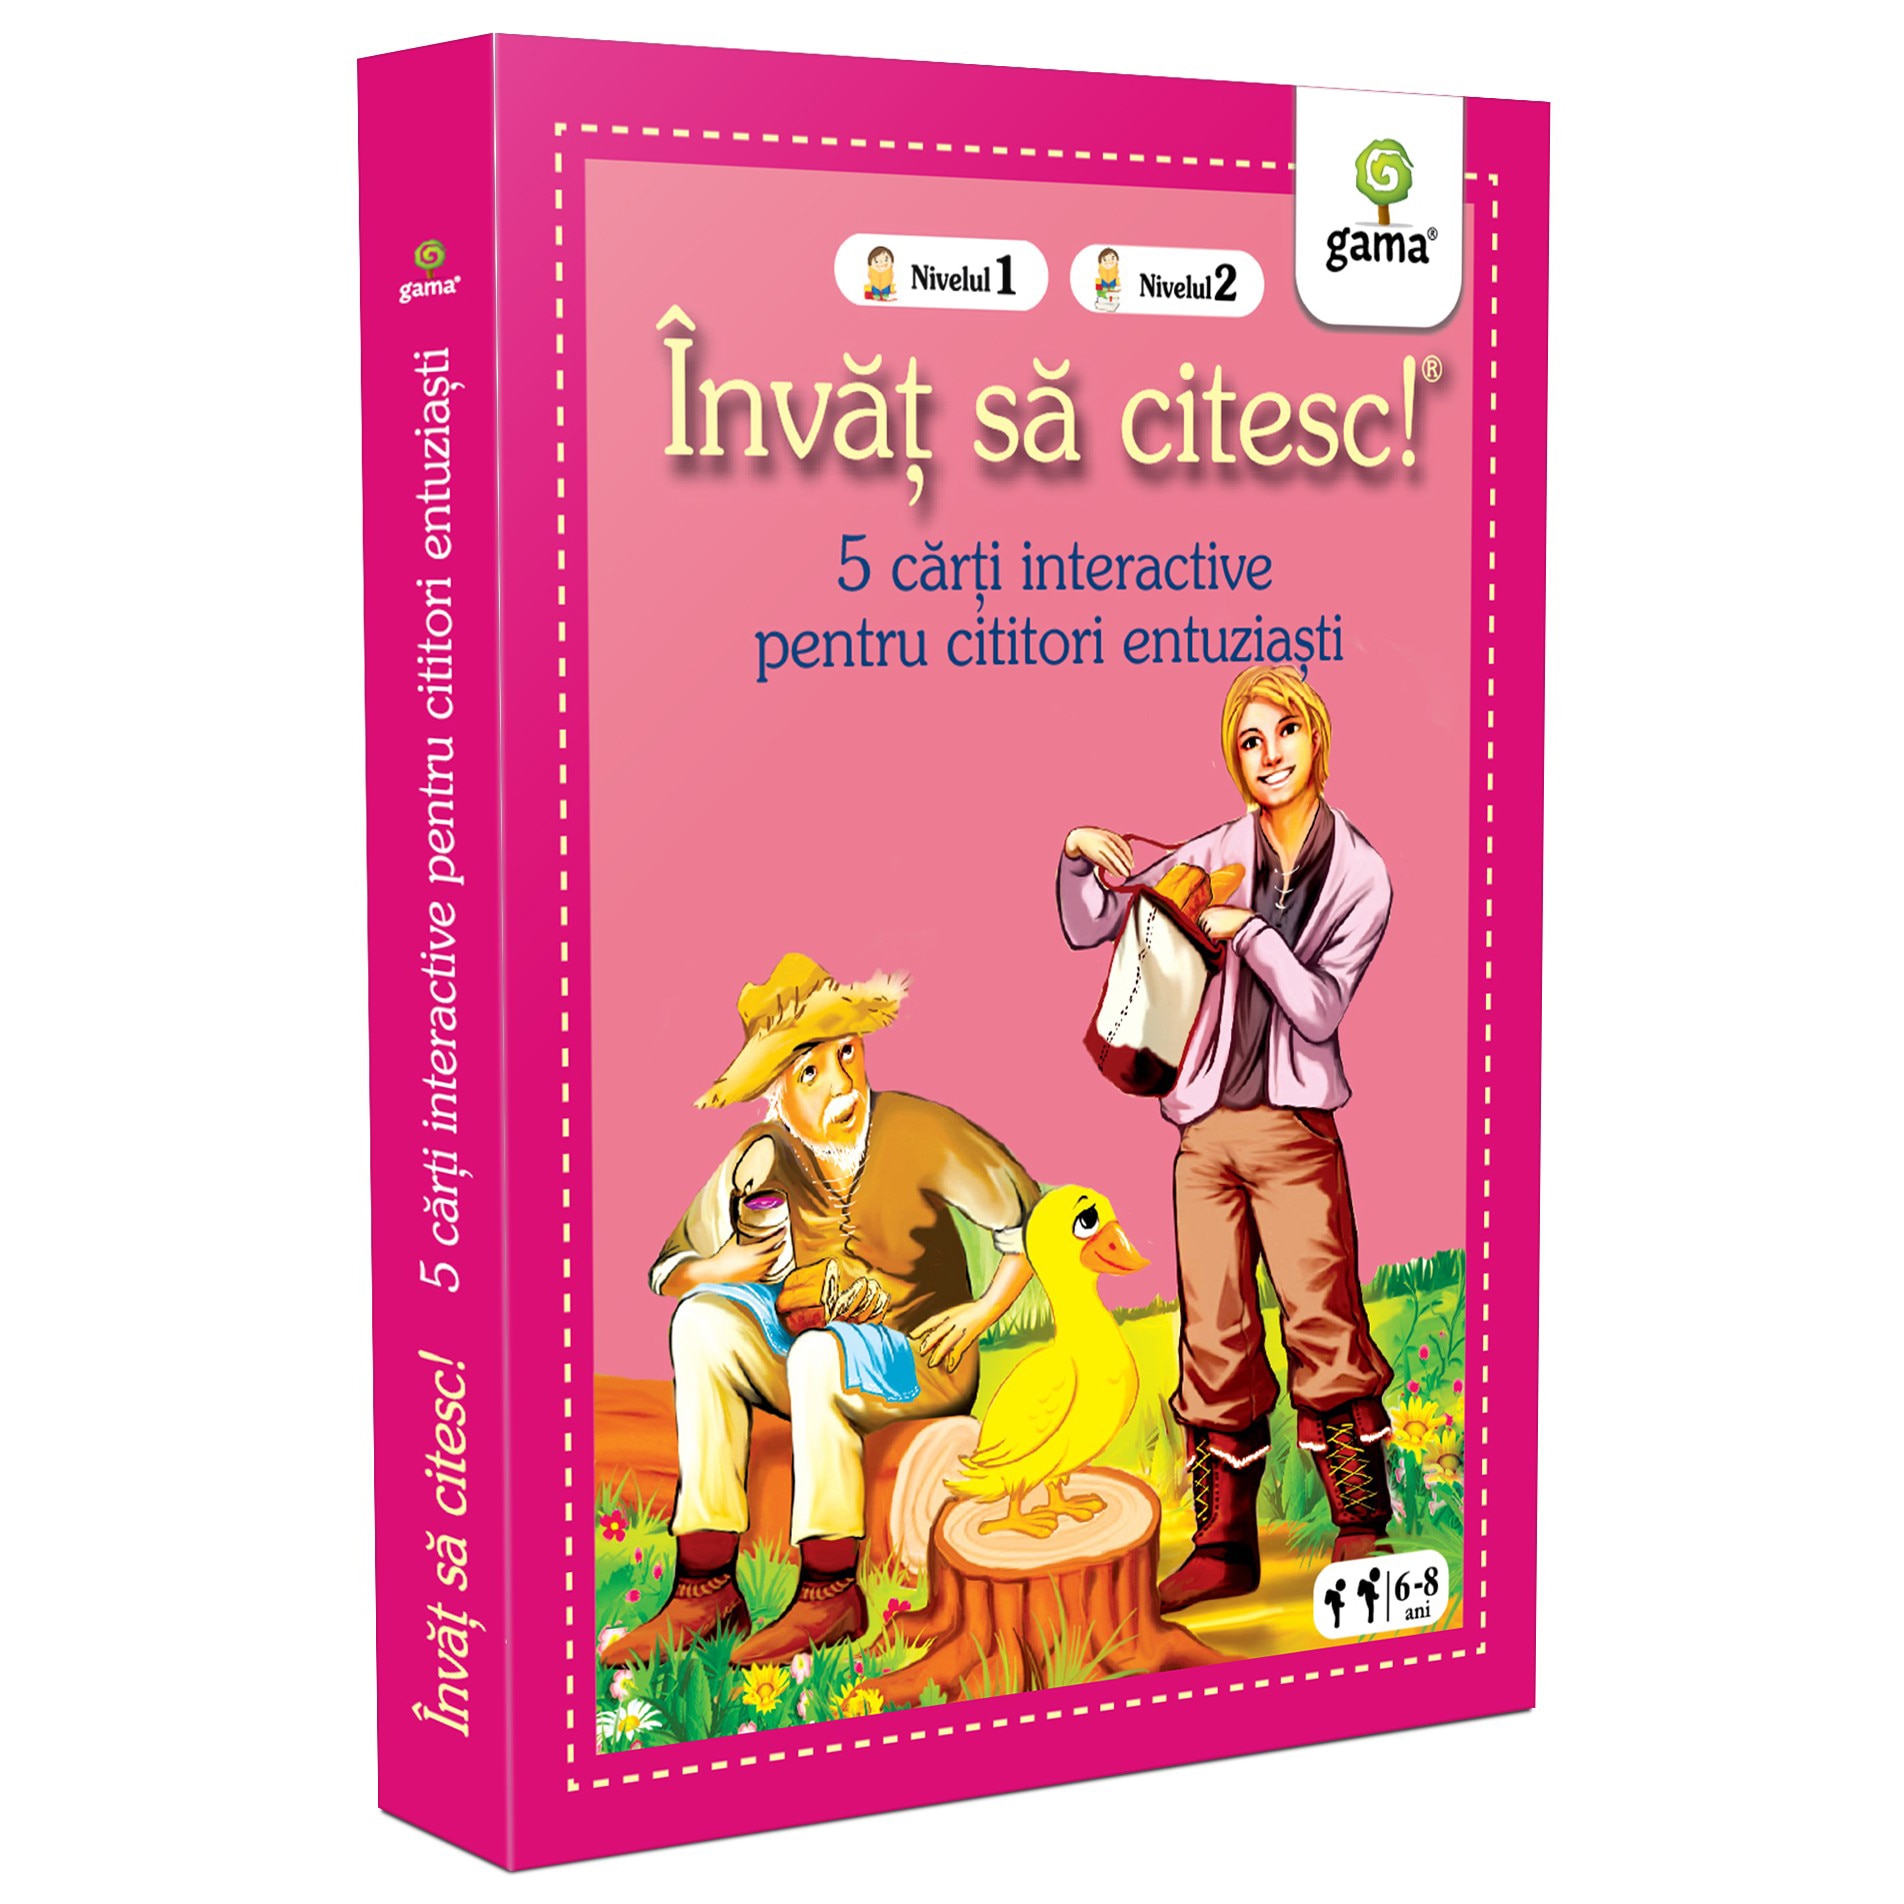 Follow us pill unit Pachet pentru copii, Invat sa citesc pentru cititori entuziasti, 6-8 ani,  vol.3, 5 carti - eMAG.ro